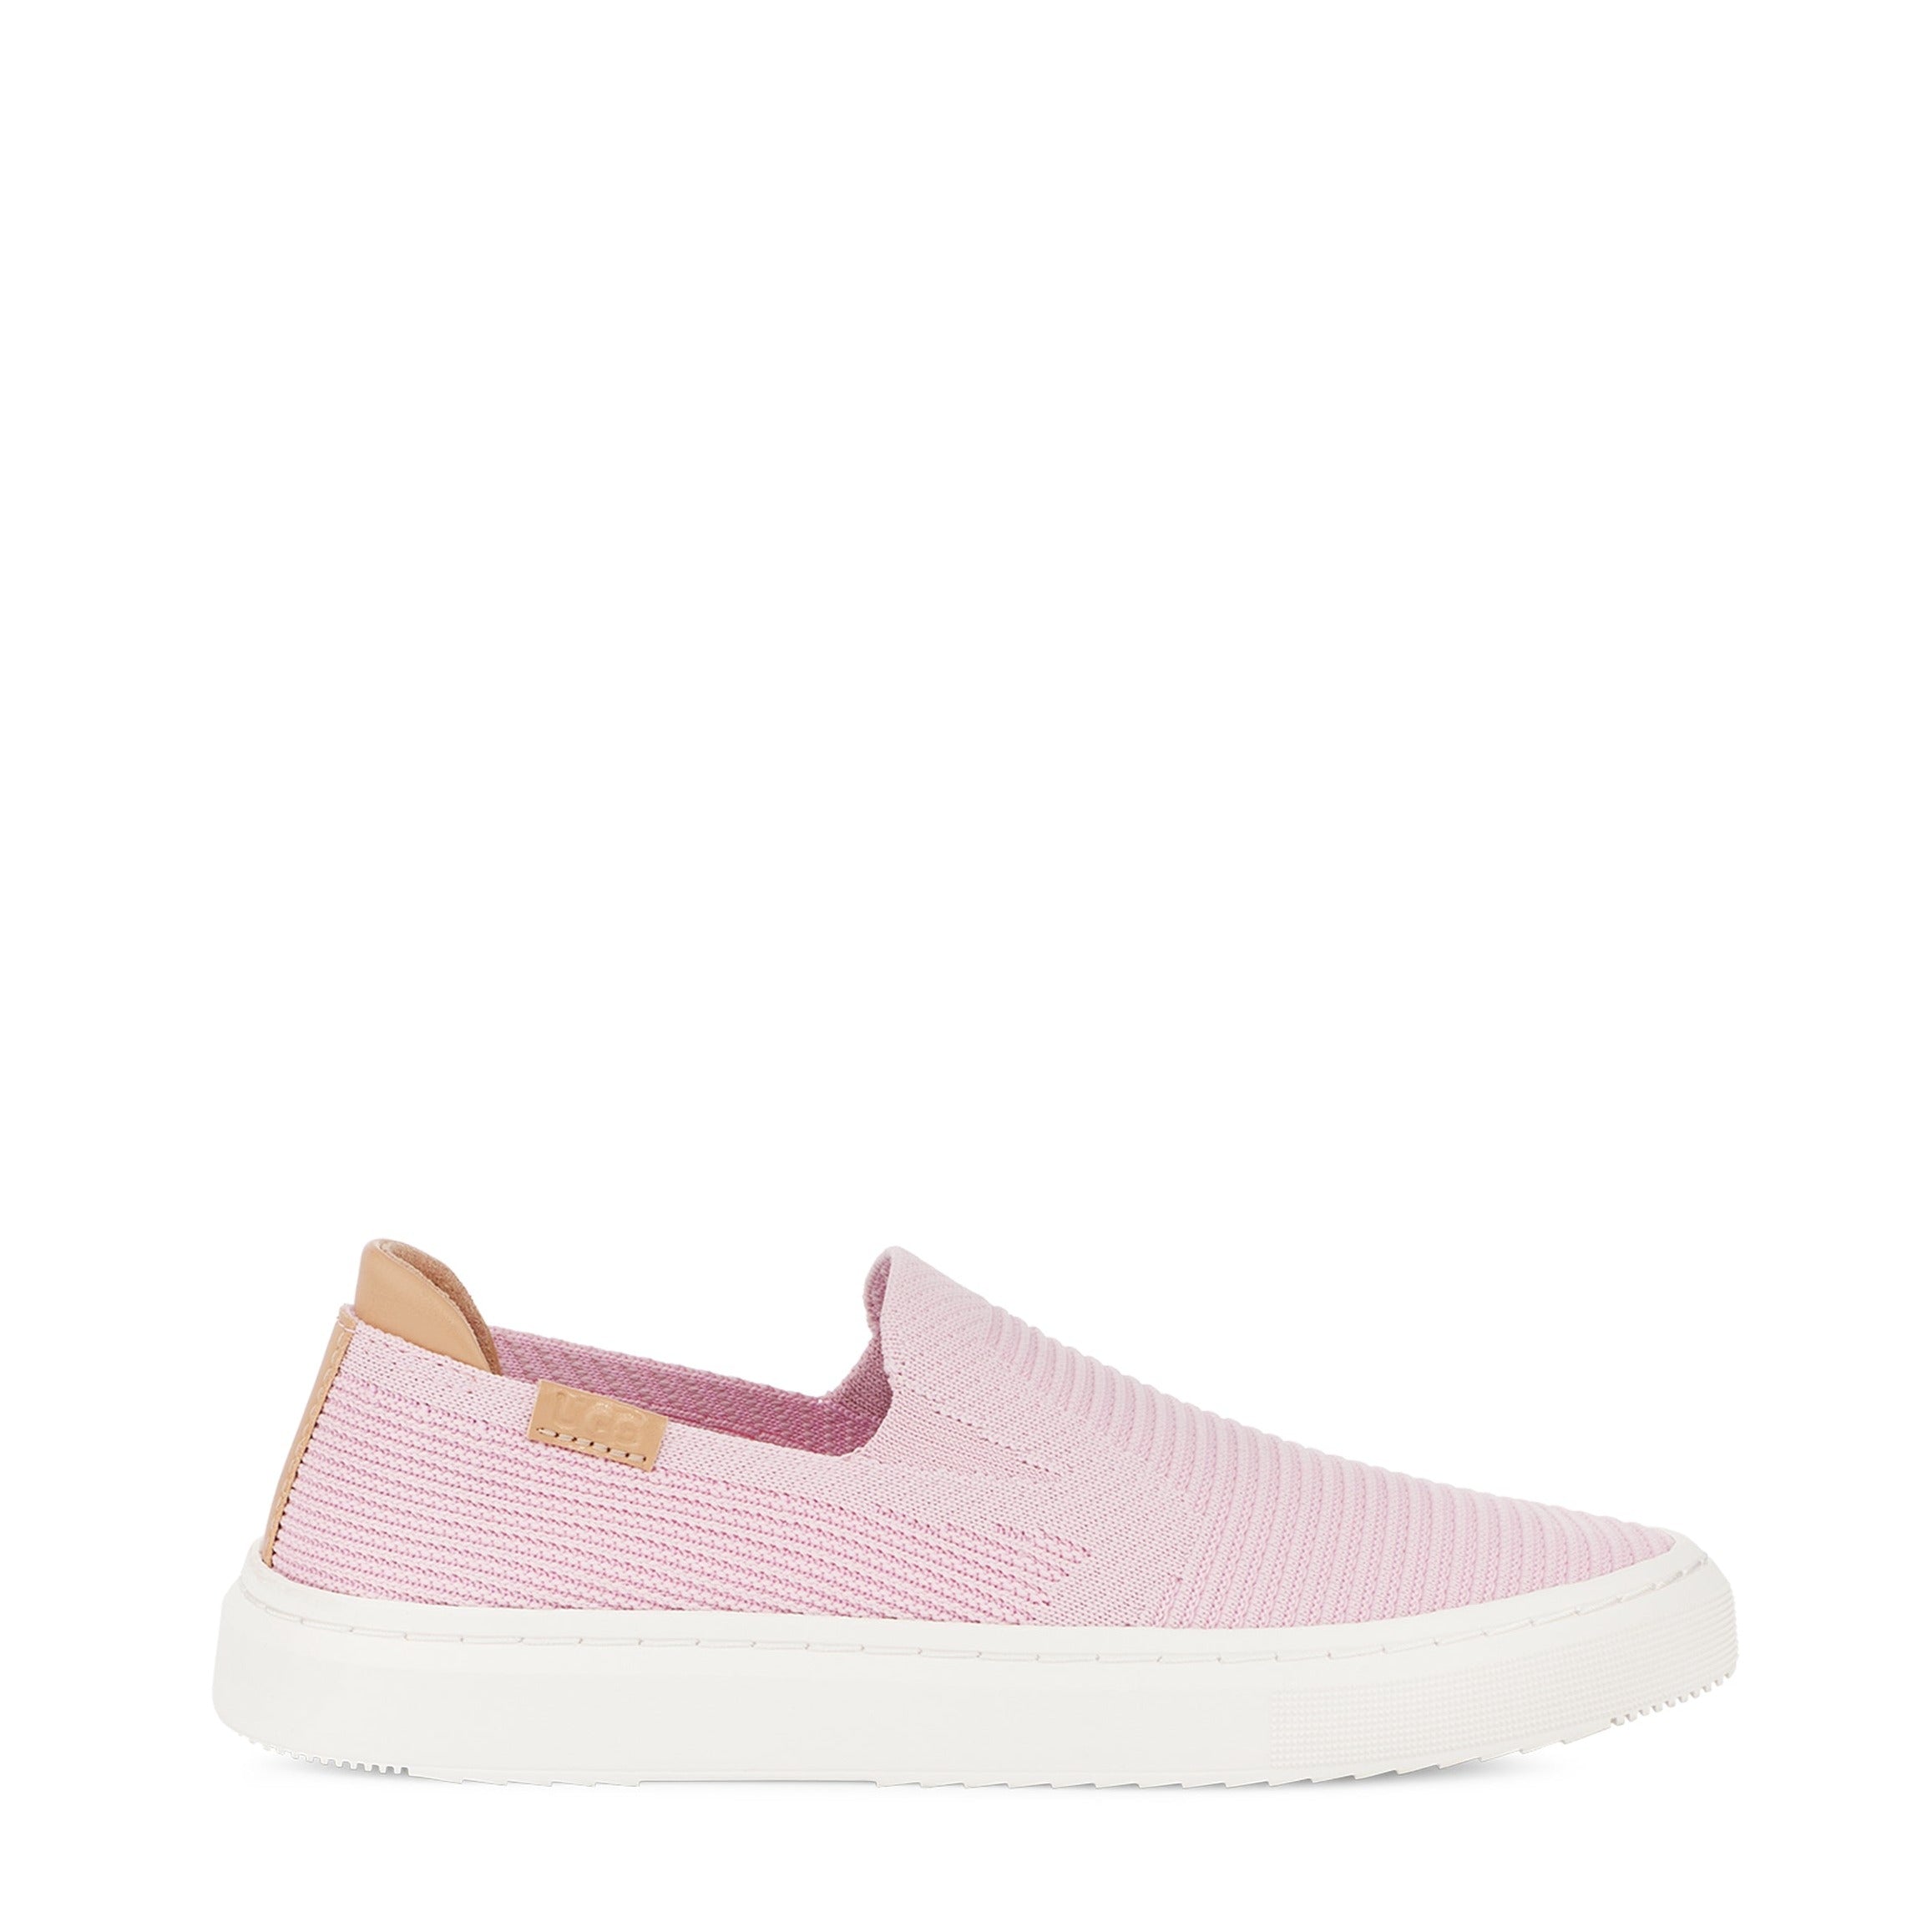 Sample UGG Alameda Sammy Sneaker Seashell Pink 5 